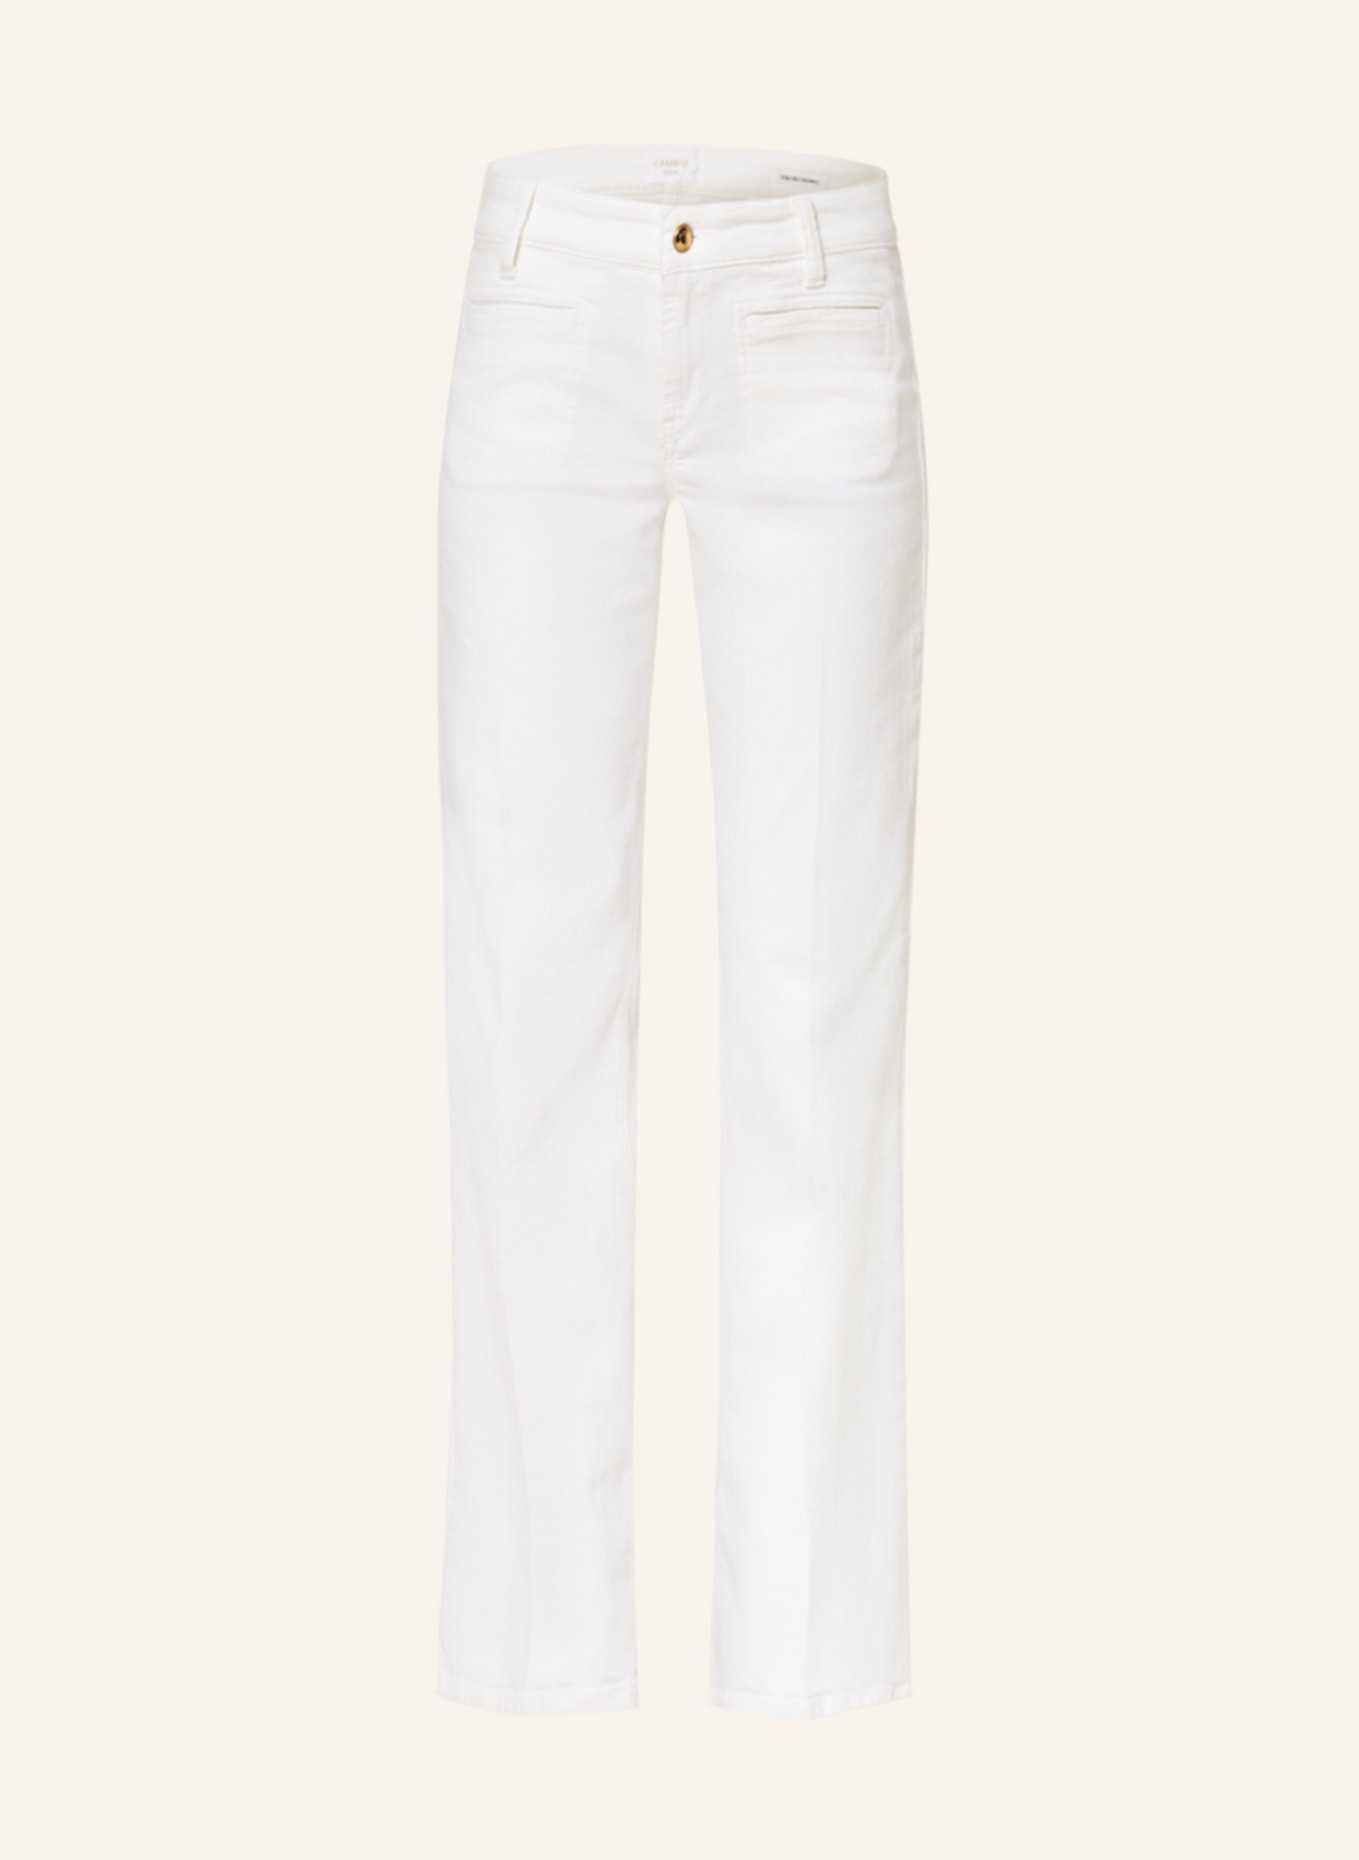 CAMBIO Jeans flared TESS, Kolor: 5113 pure white stone (Obrazek 1)